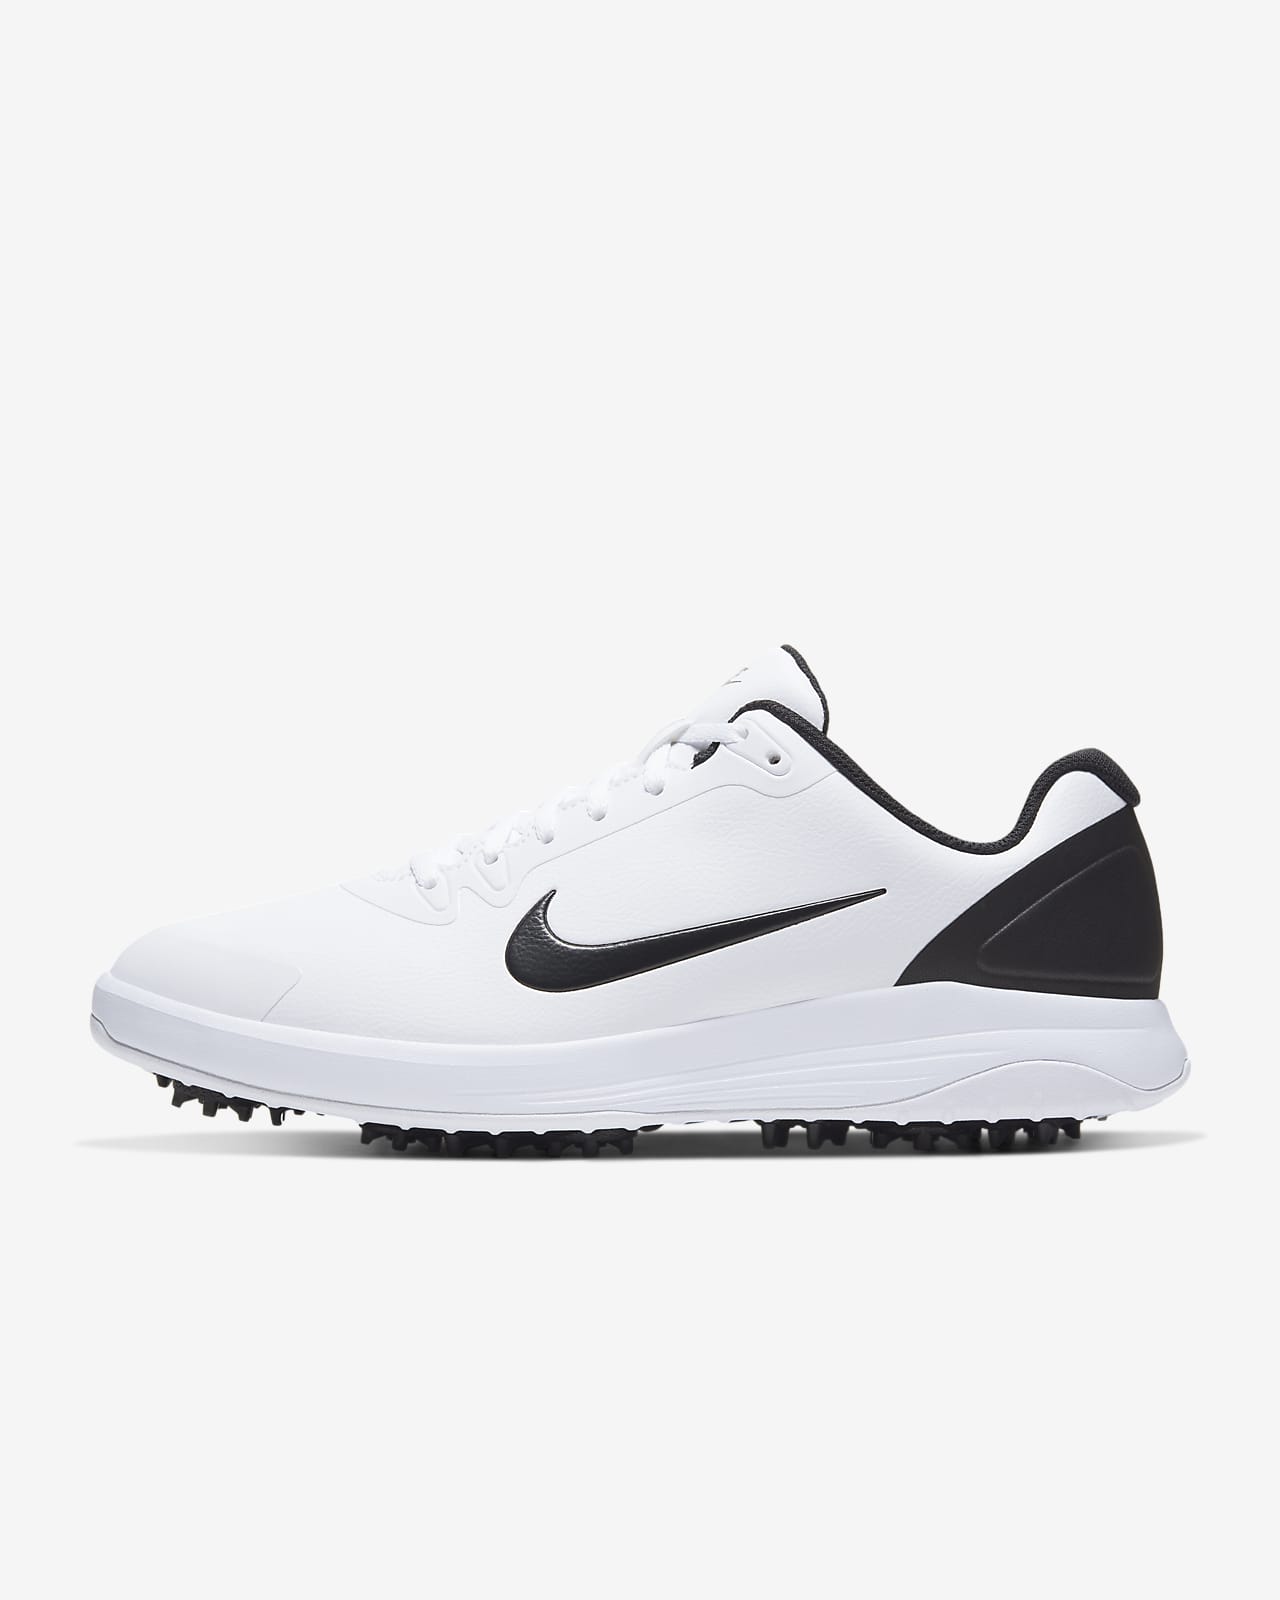 Nike golf shoes - philipshigh.co.uk